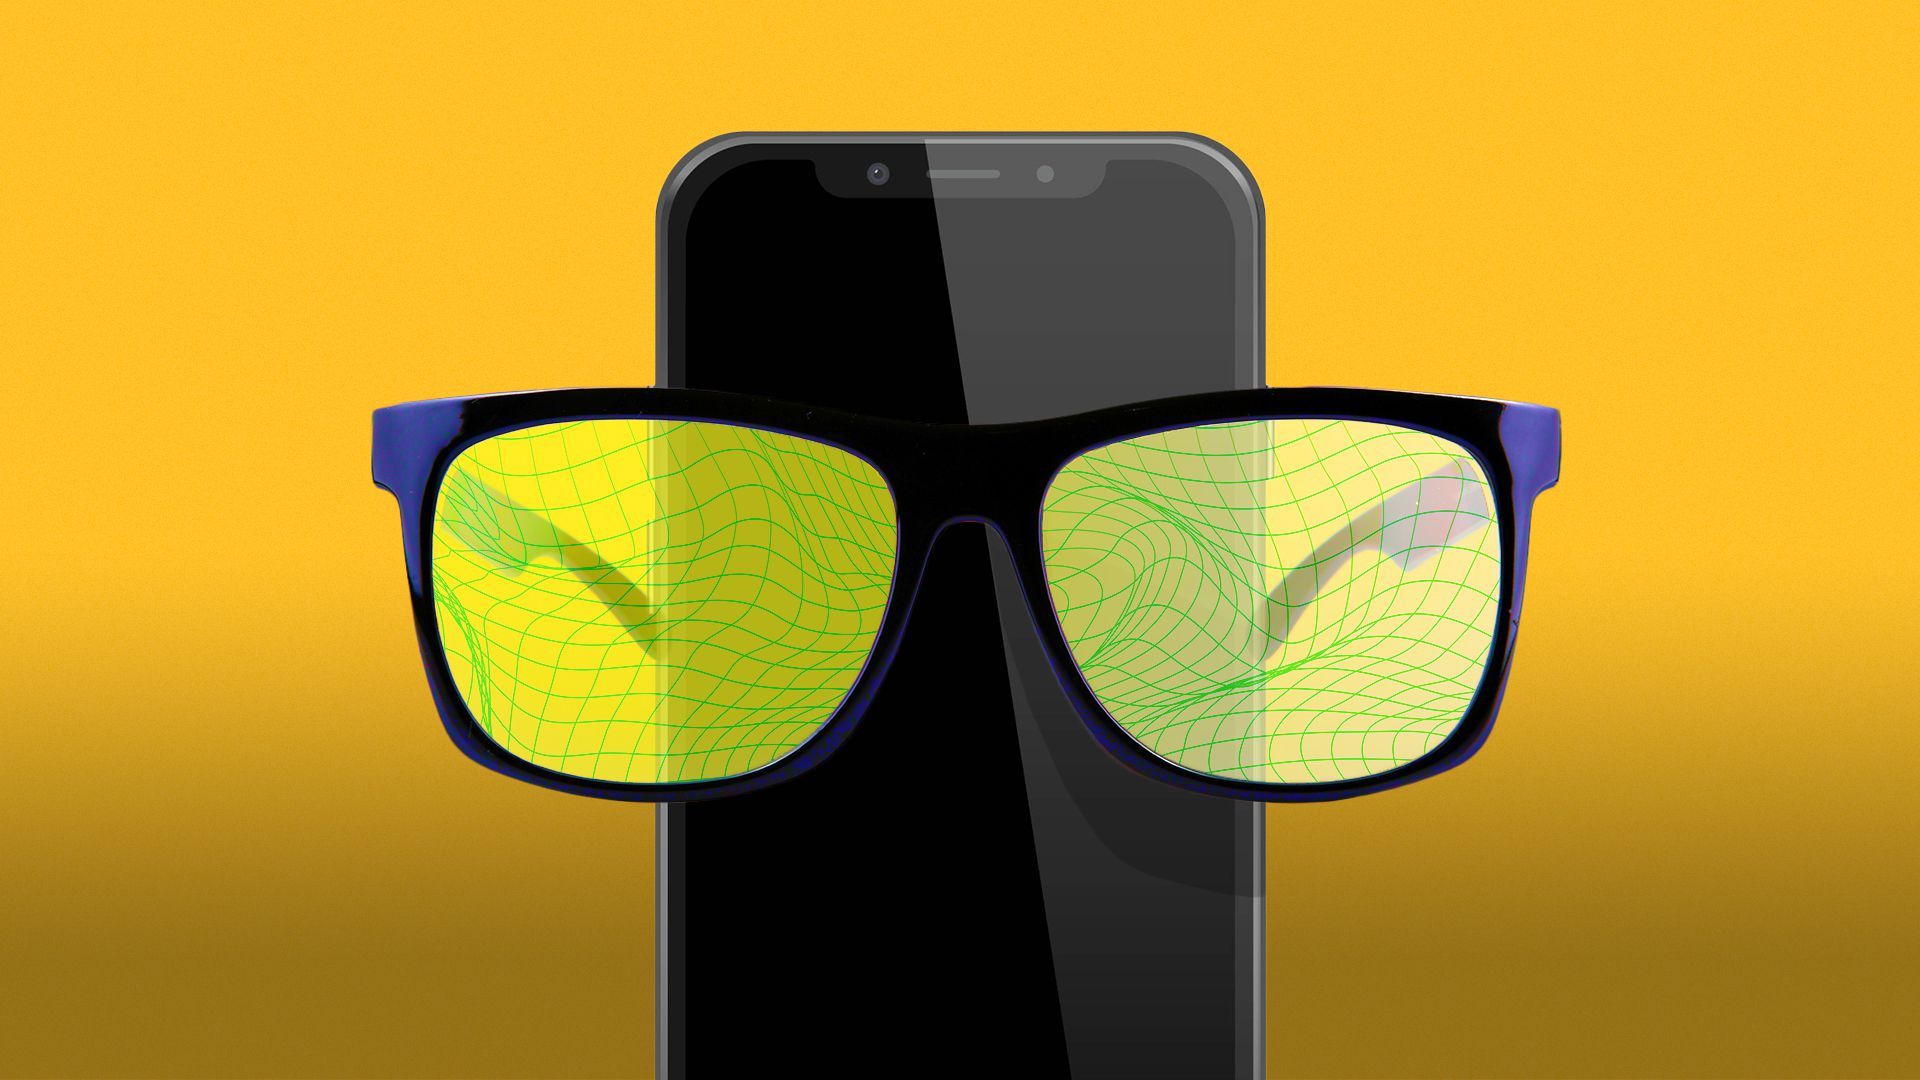 Illustration of a smart phone wearing glasses